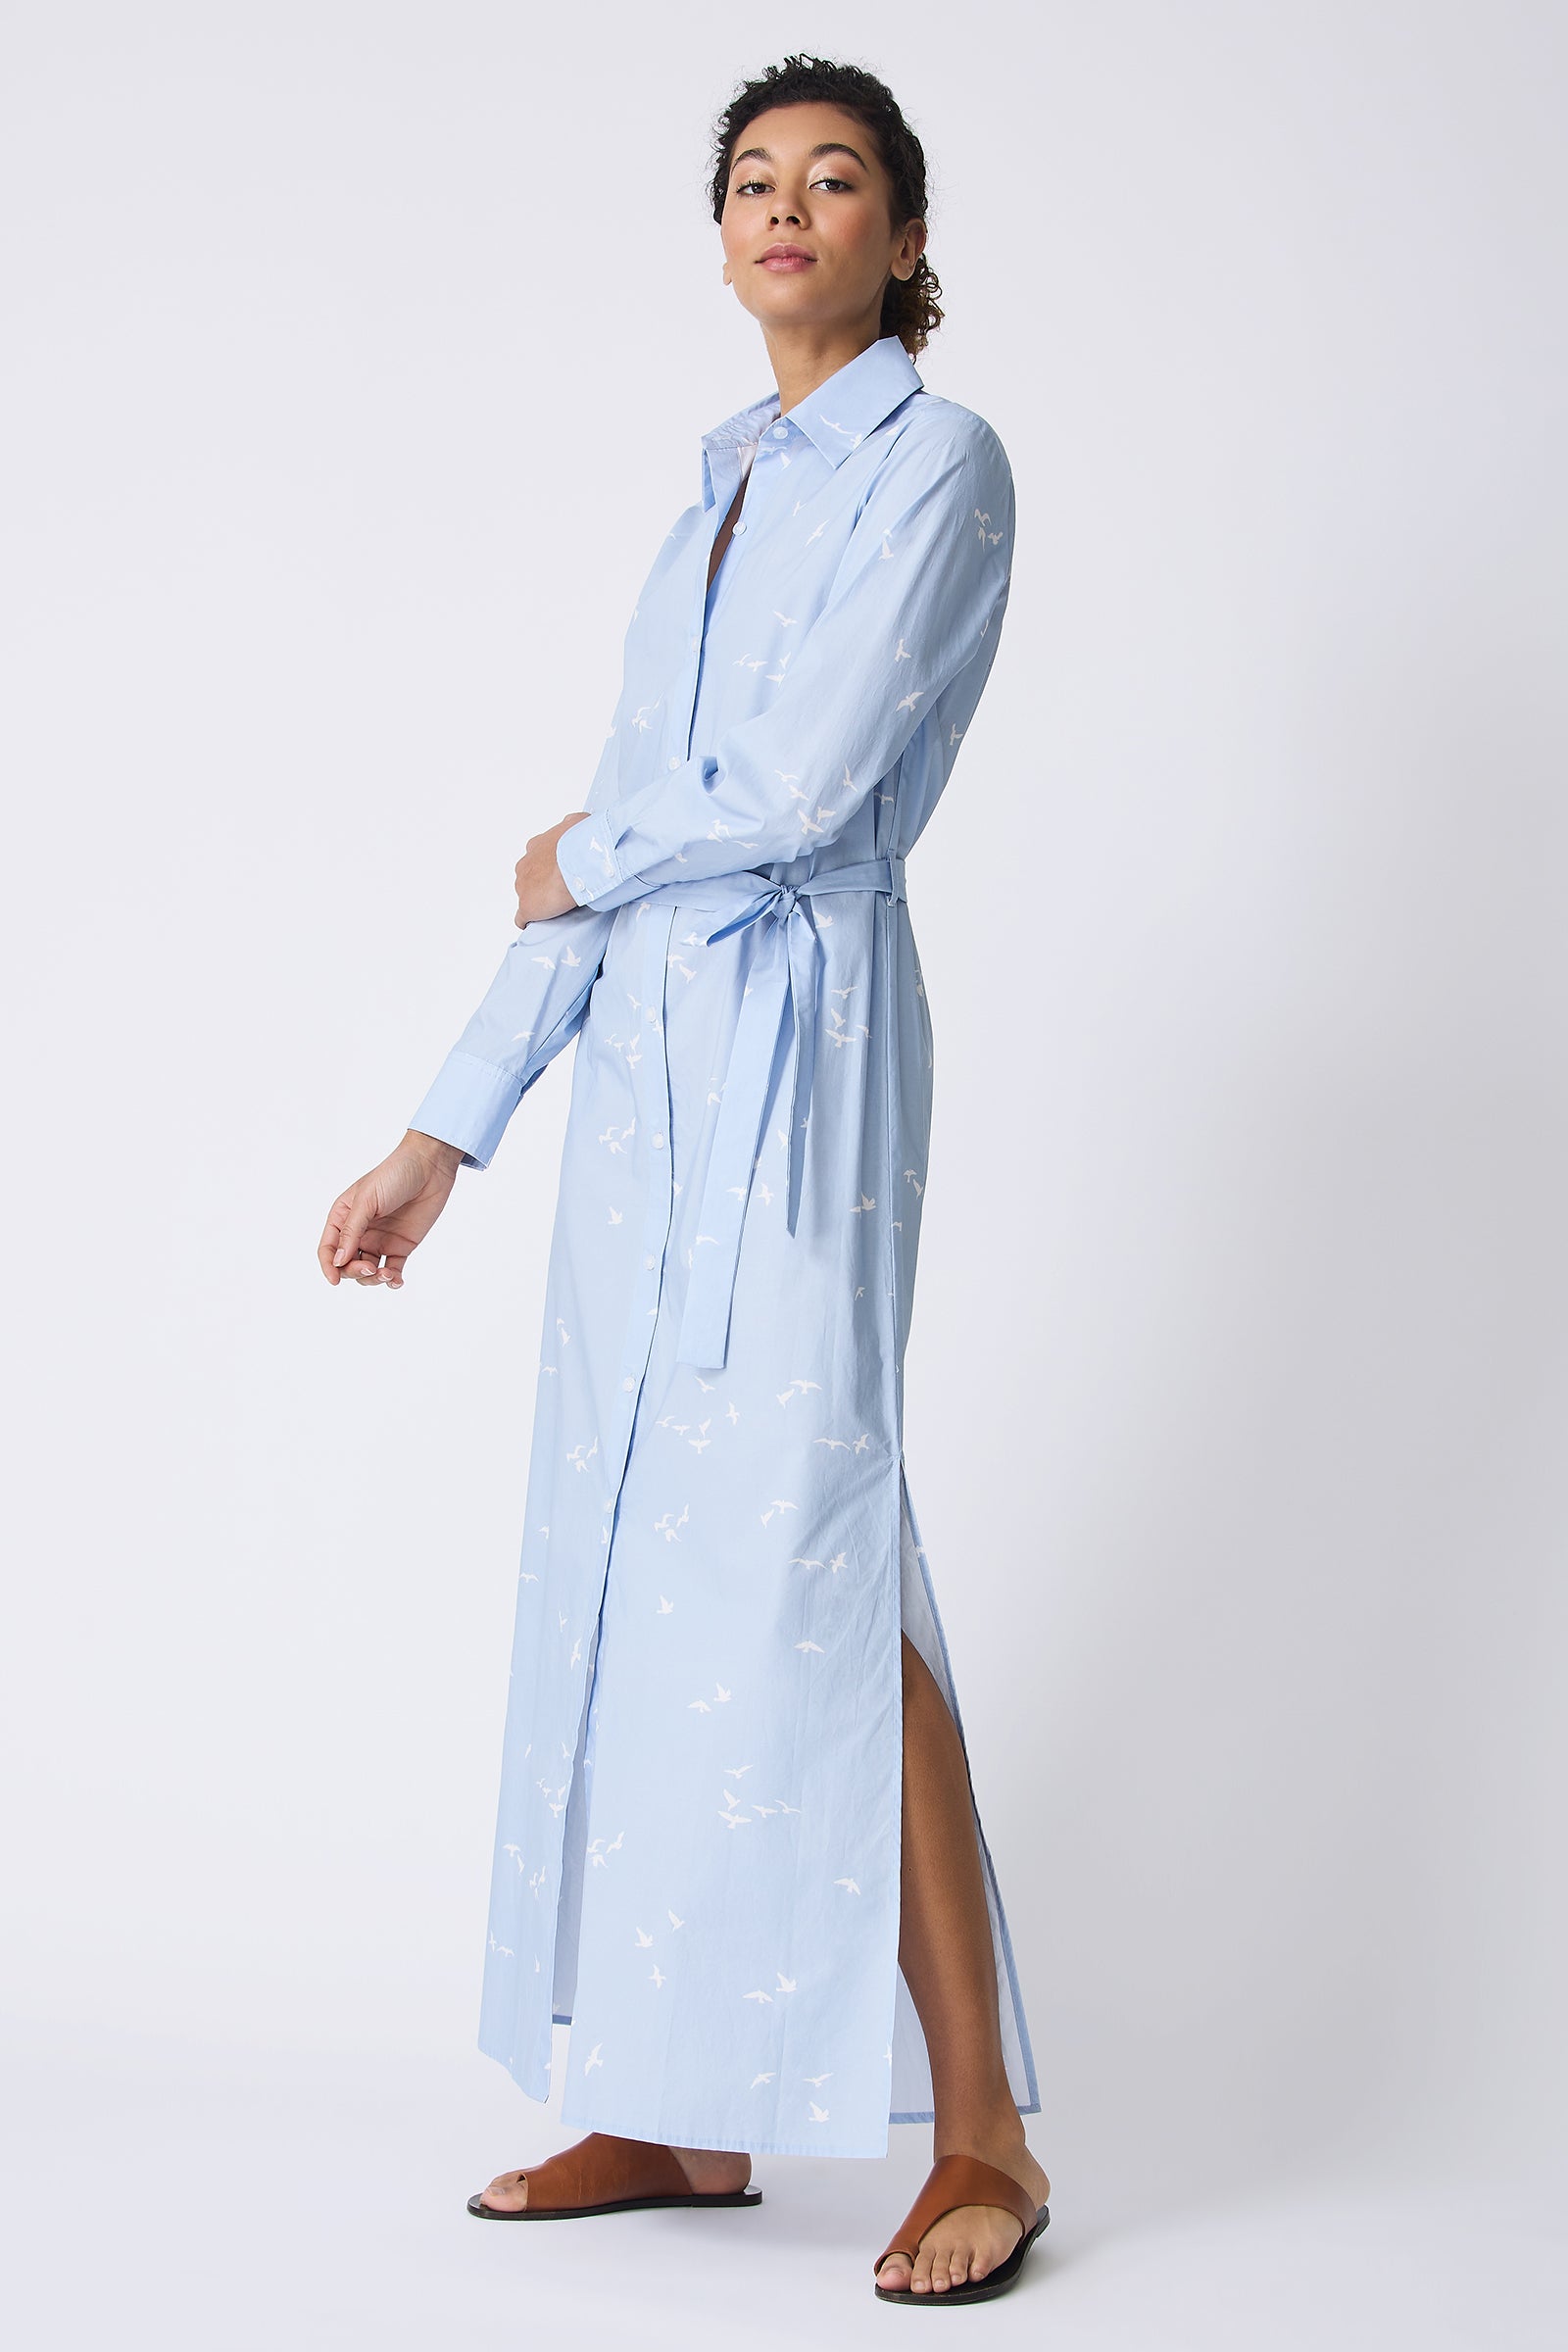 Kal Rieman June Maxi Dress in Oxford Blue Bird Print on model full side view